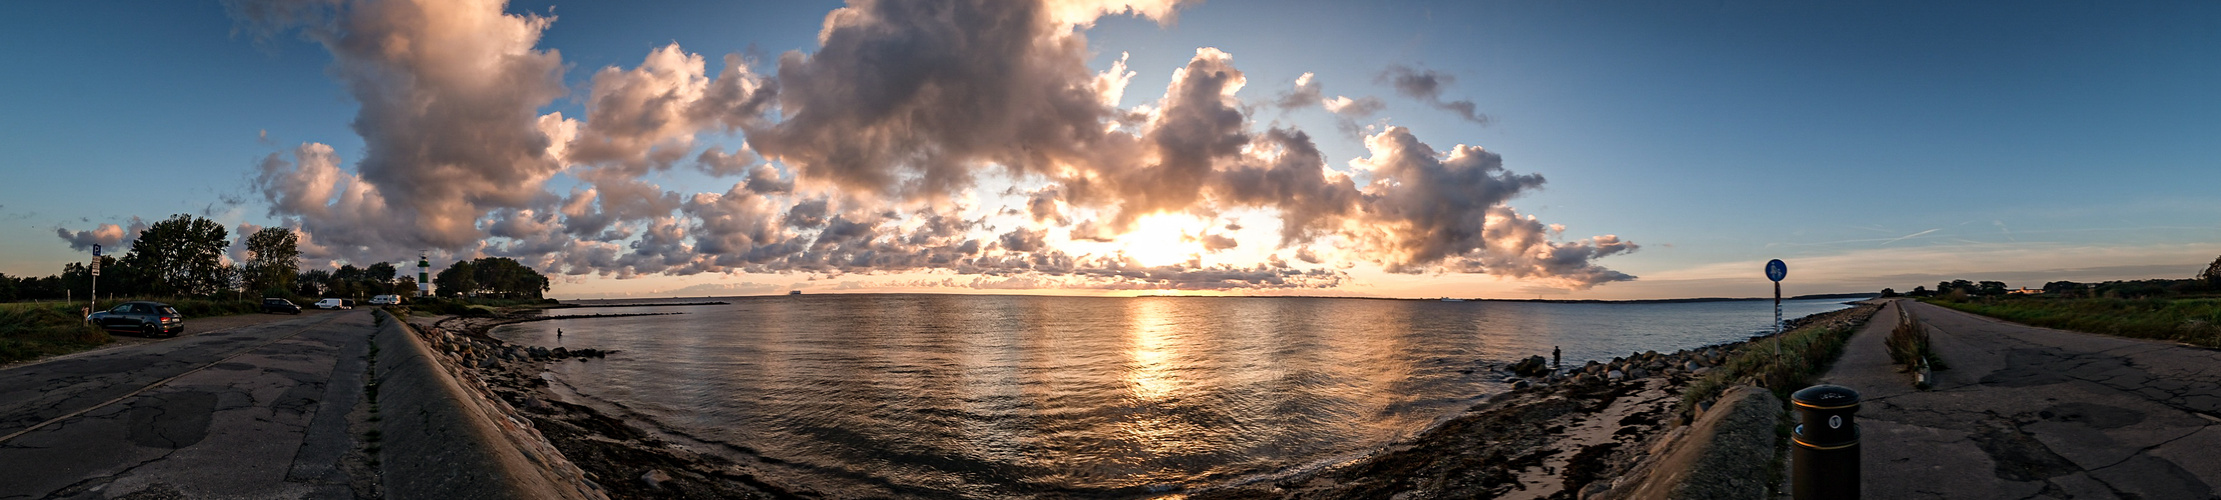 Morgendliches Panorama 